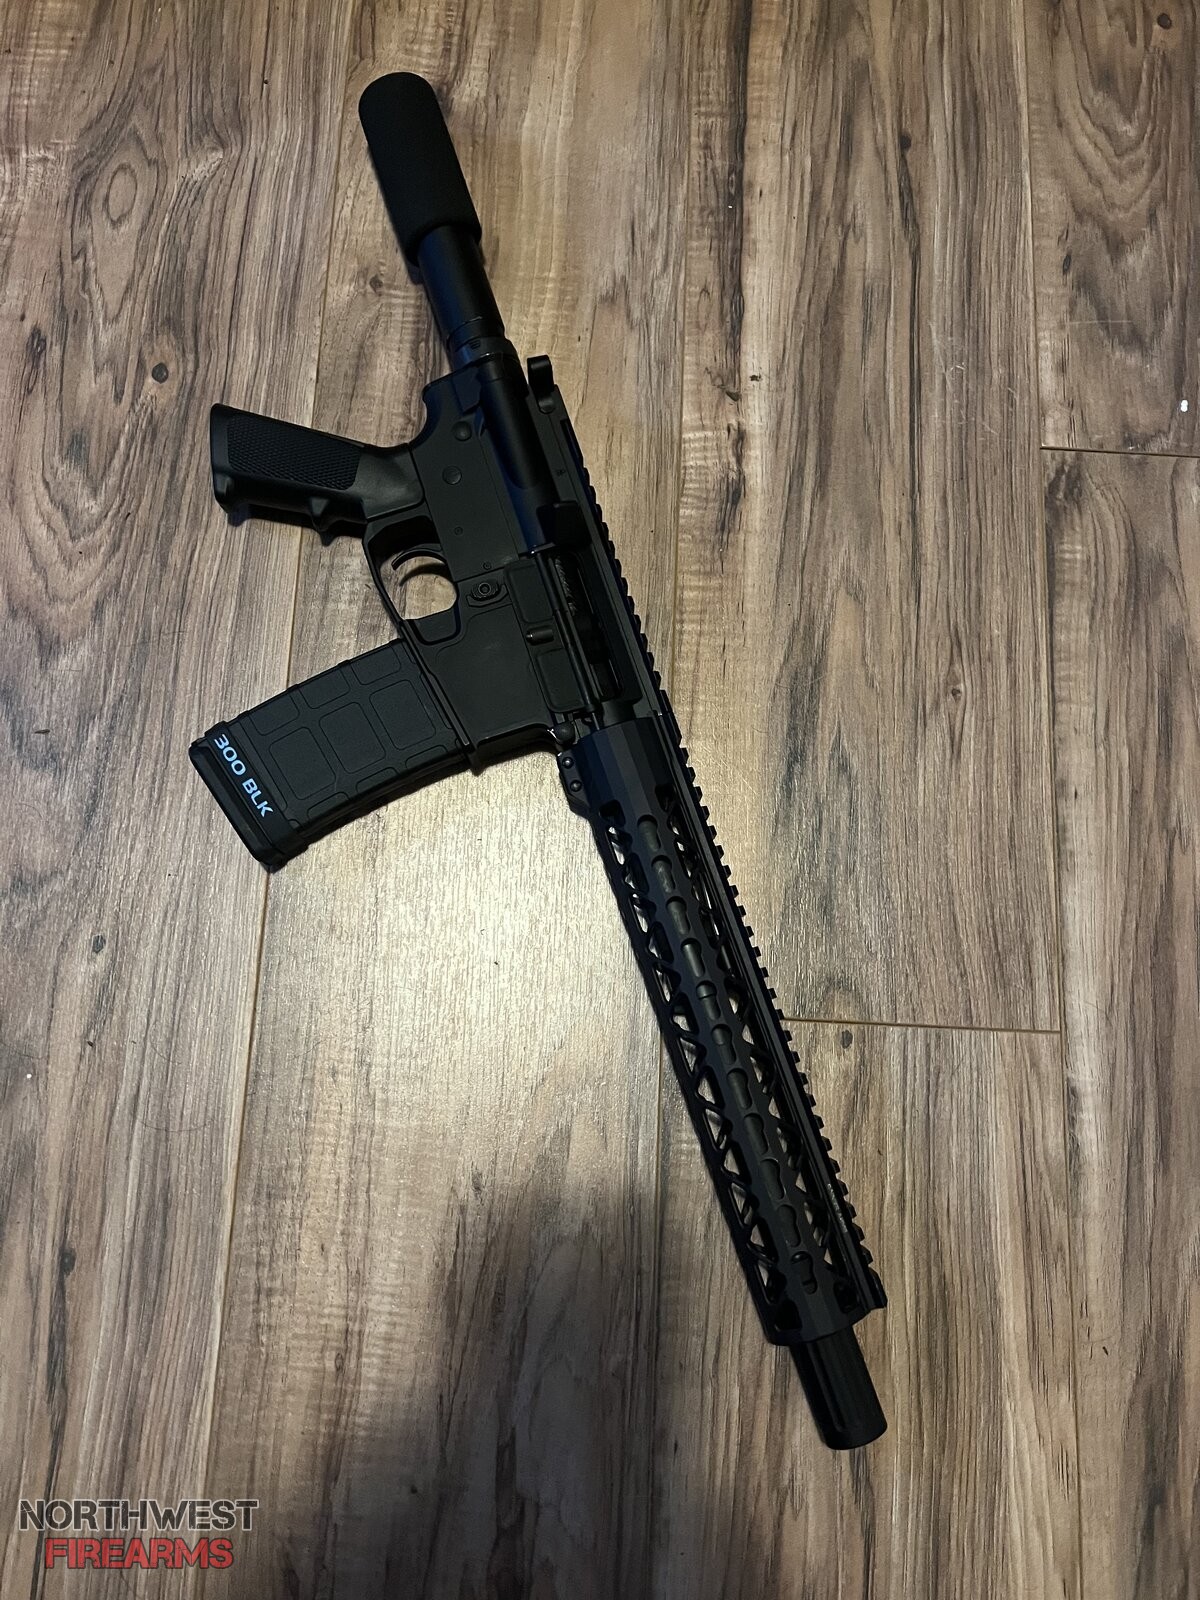 AR15 Pistol 300 blackout. Ready to shoot | Northwest Firearms